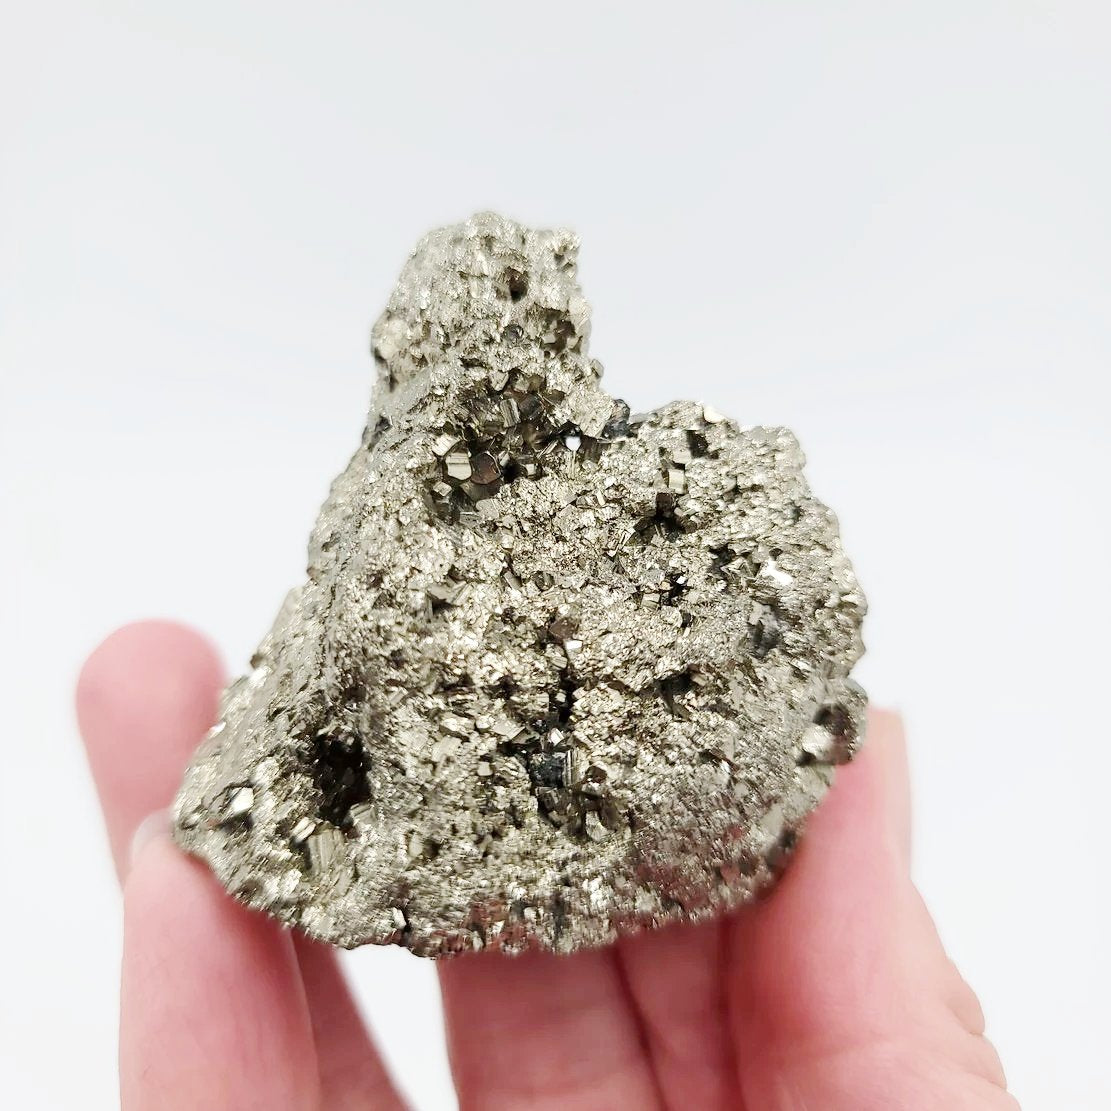 Pyrite Rough Cut Base Specimen Geode Stand "Medium" - Elevated Metaphysical